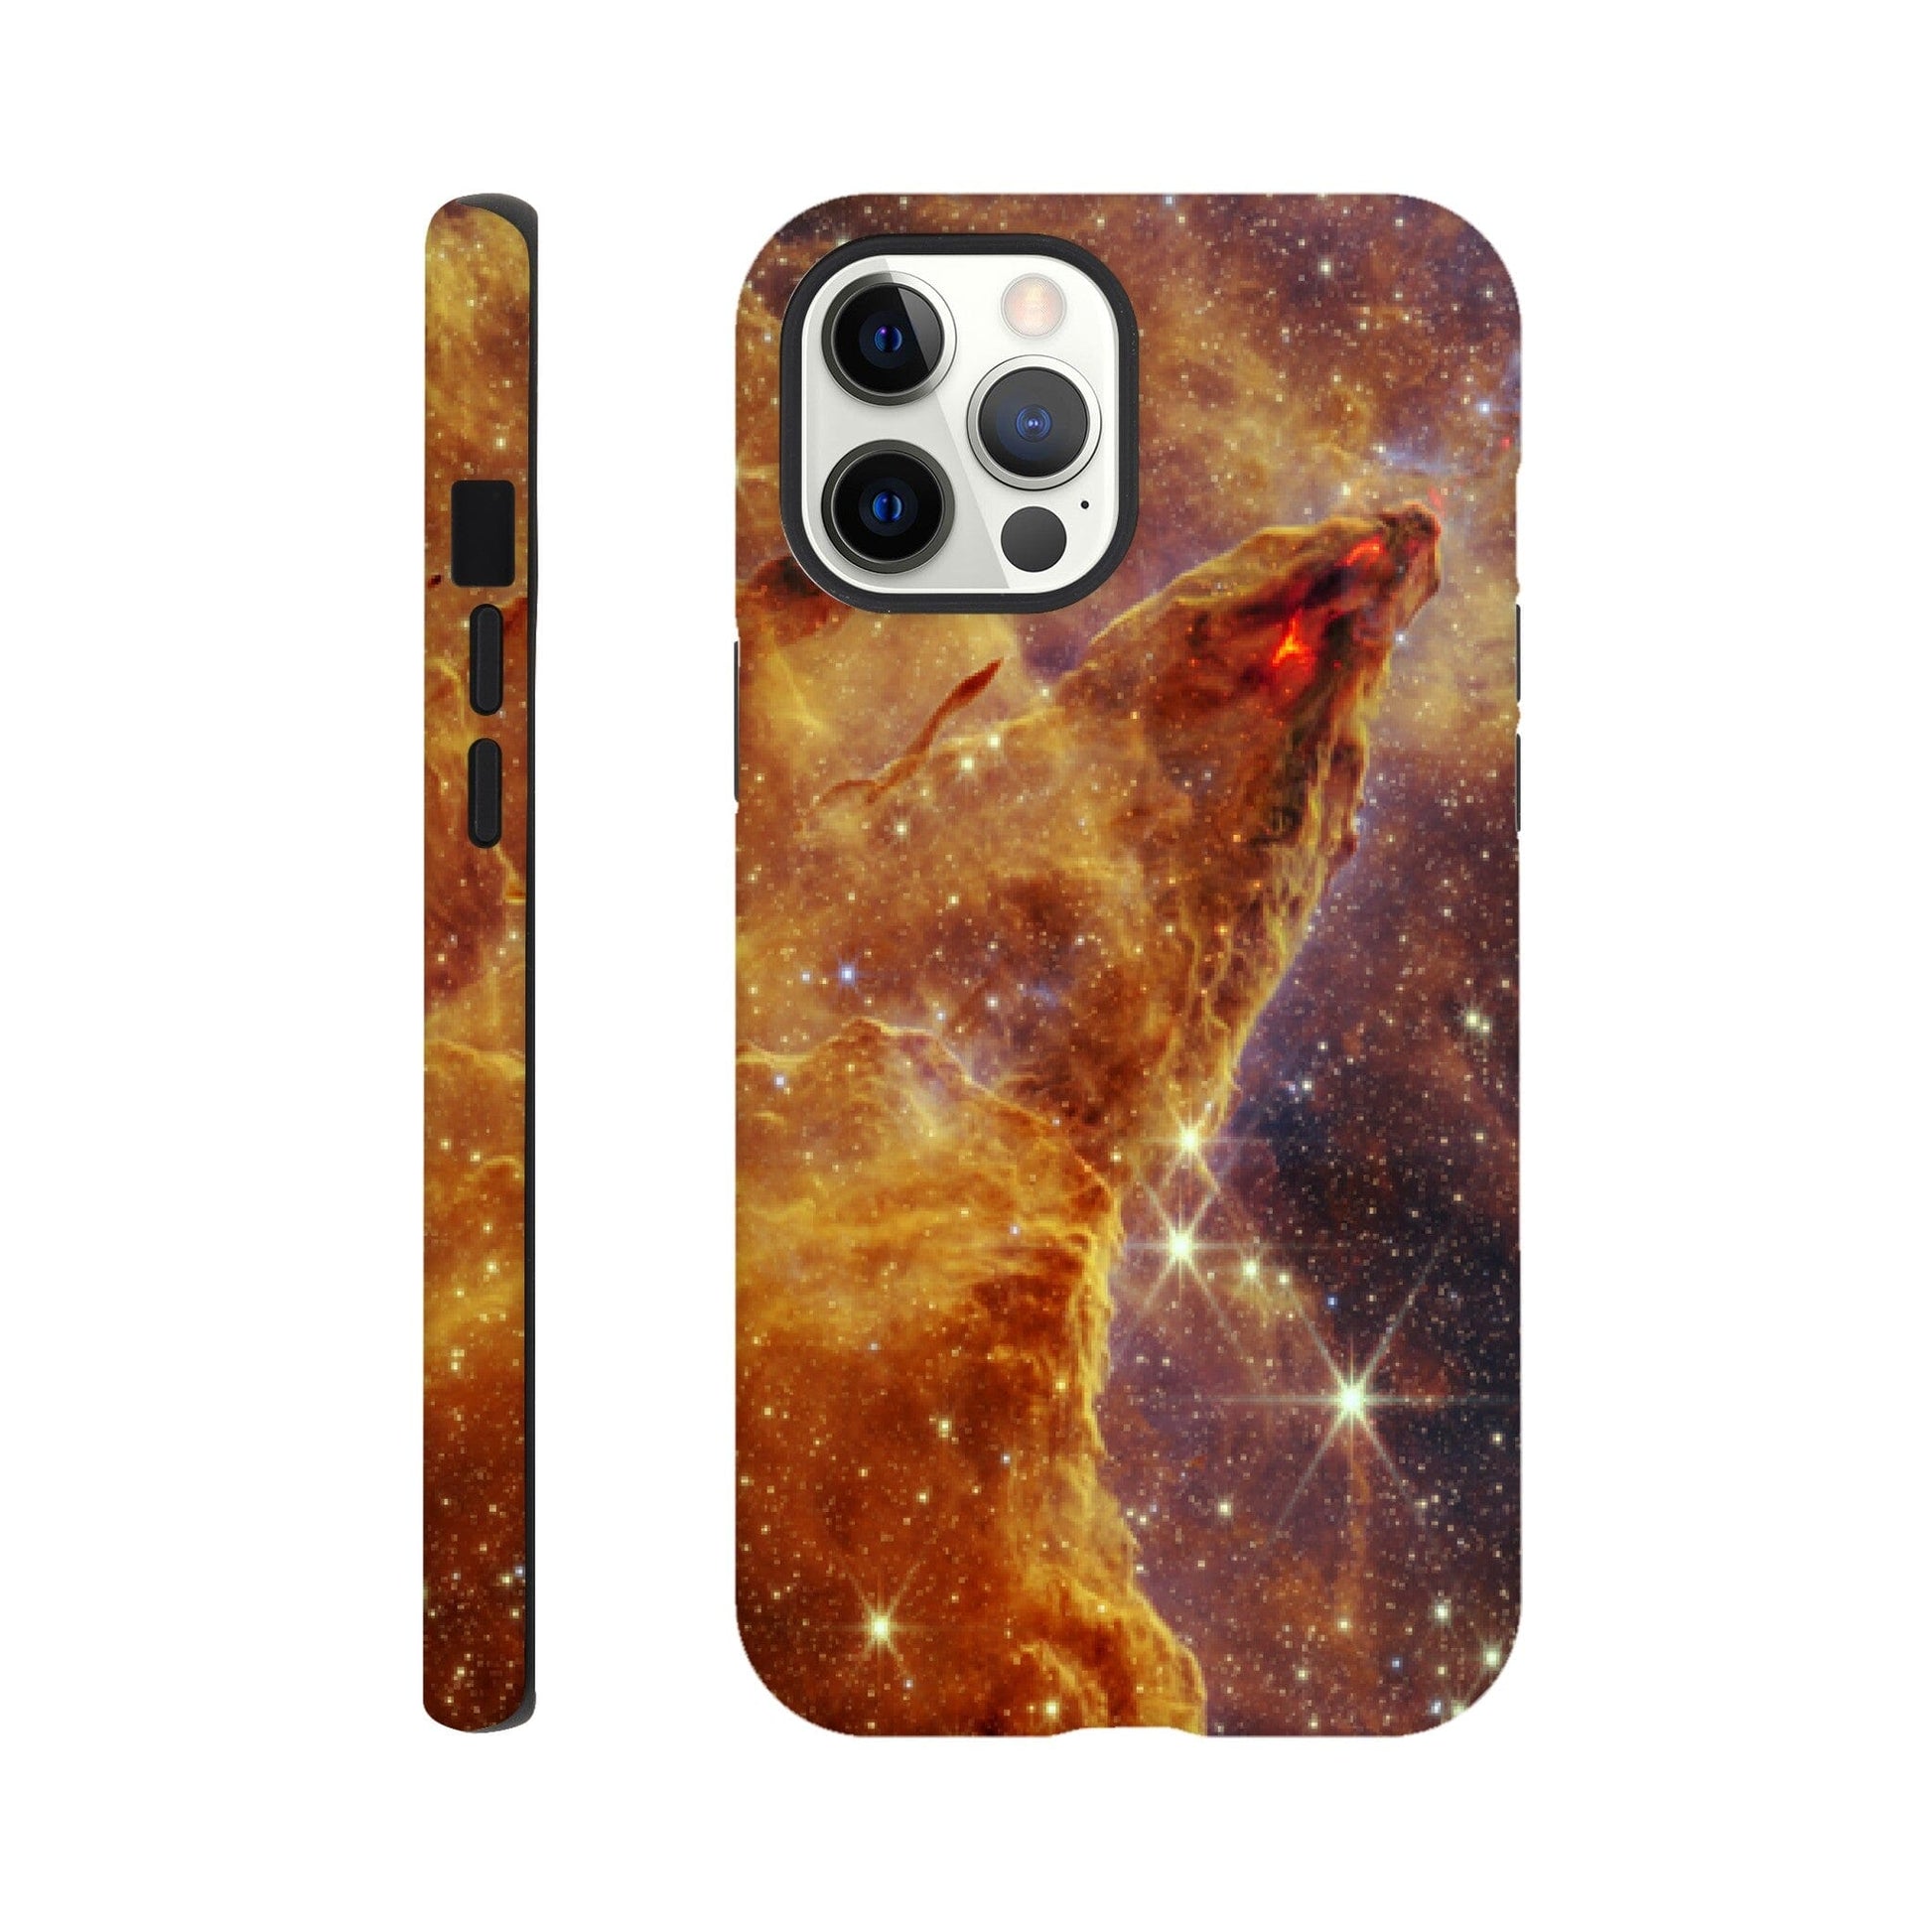 NASA - Phone Case Tough - 9. Pillars of Creation (NIRCam Image) - James Webb Space Telescope Phone Case TP Aviation Art iPhone 12 Pro Max 